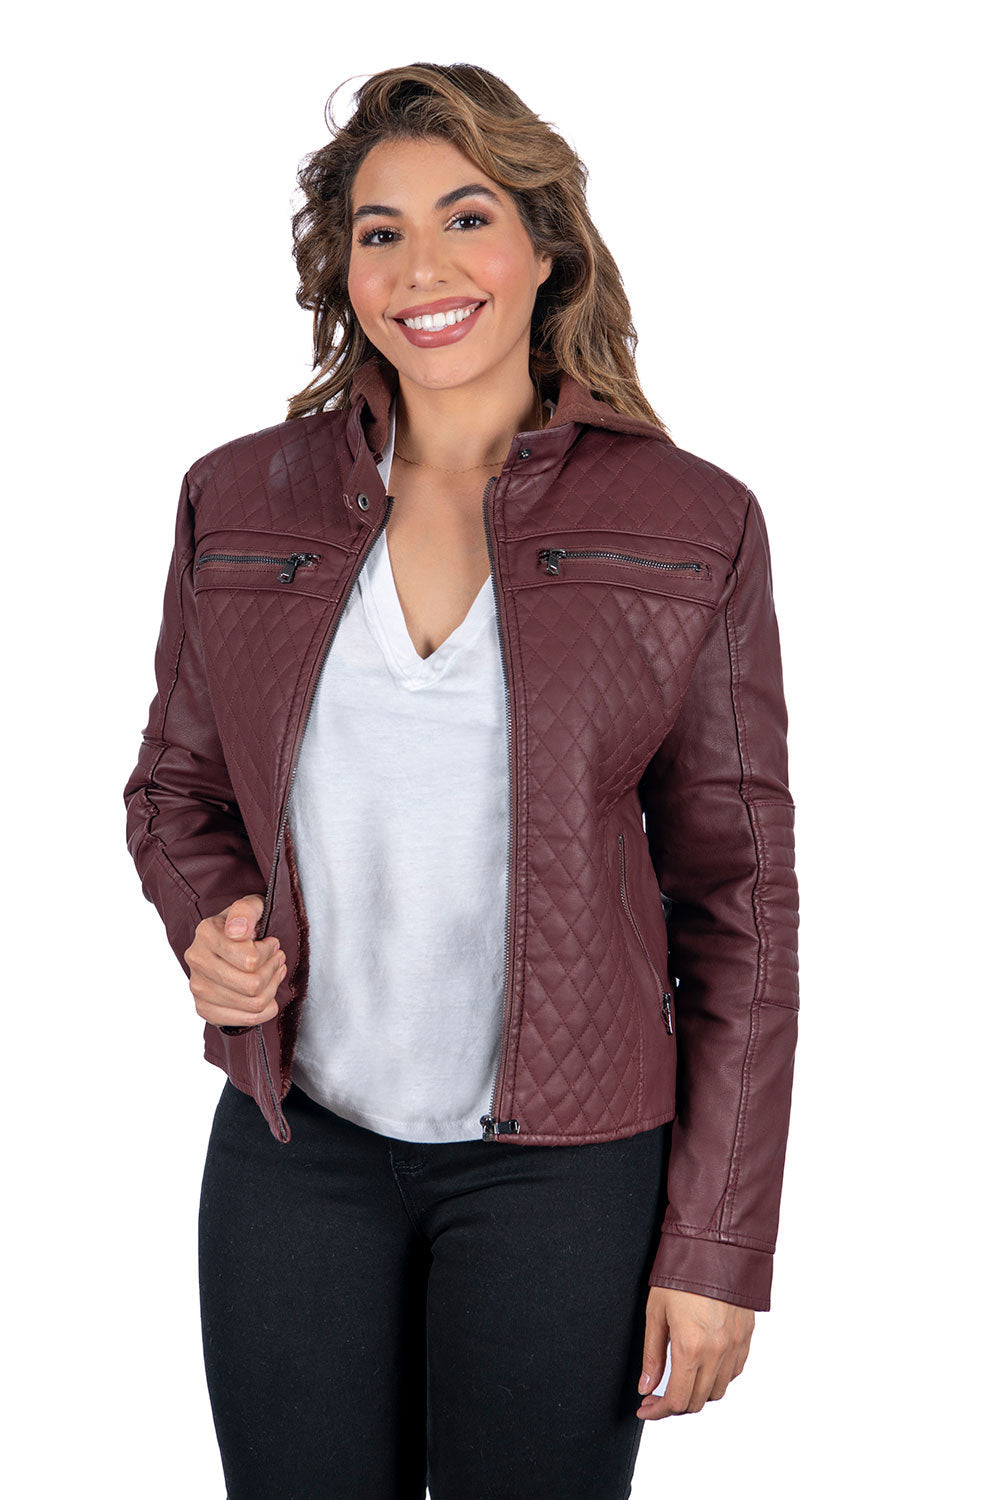 Women's PU Leather Hoodie Jackets (S-M-L-XL-2XL / 3-7-7-4-3) 24 pcs